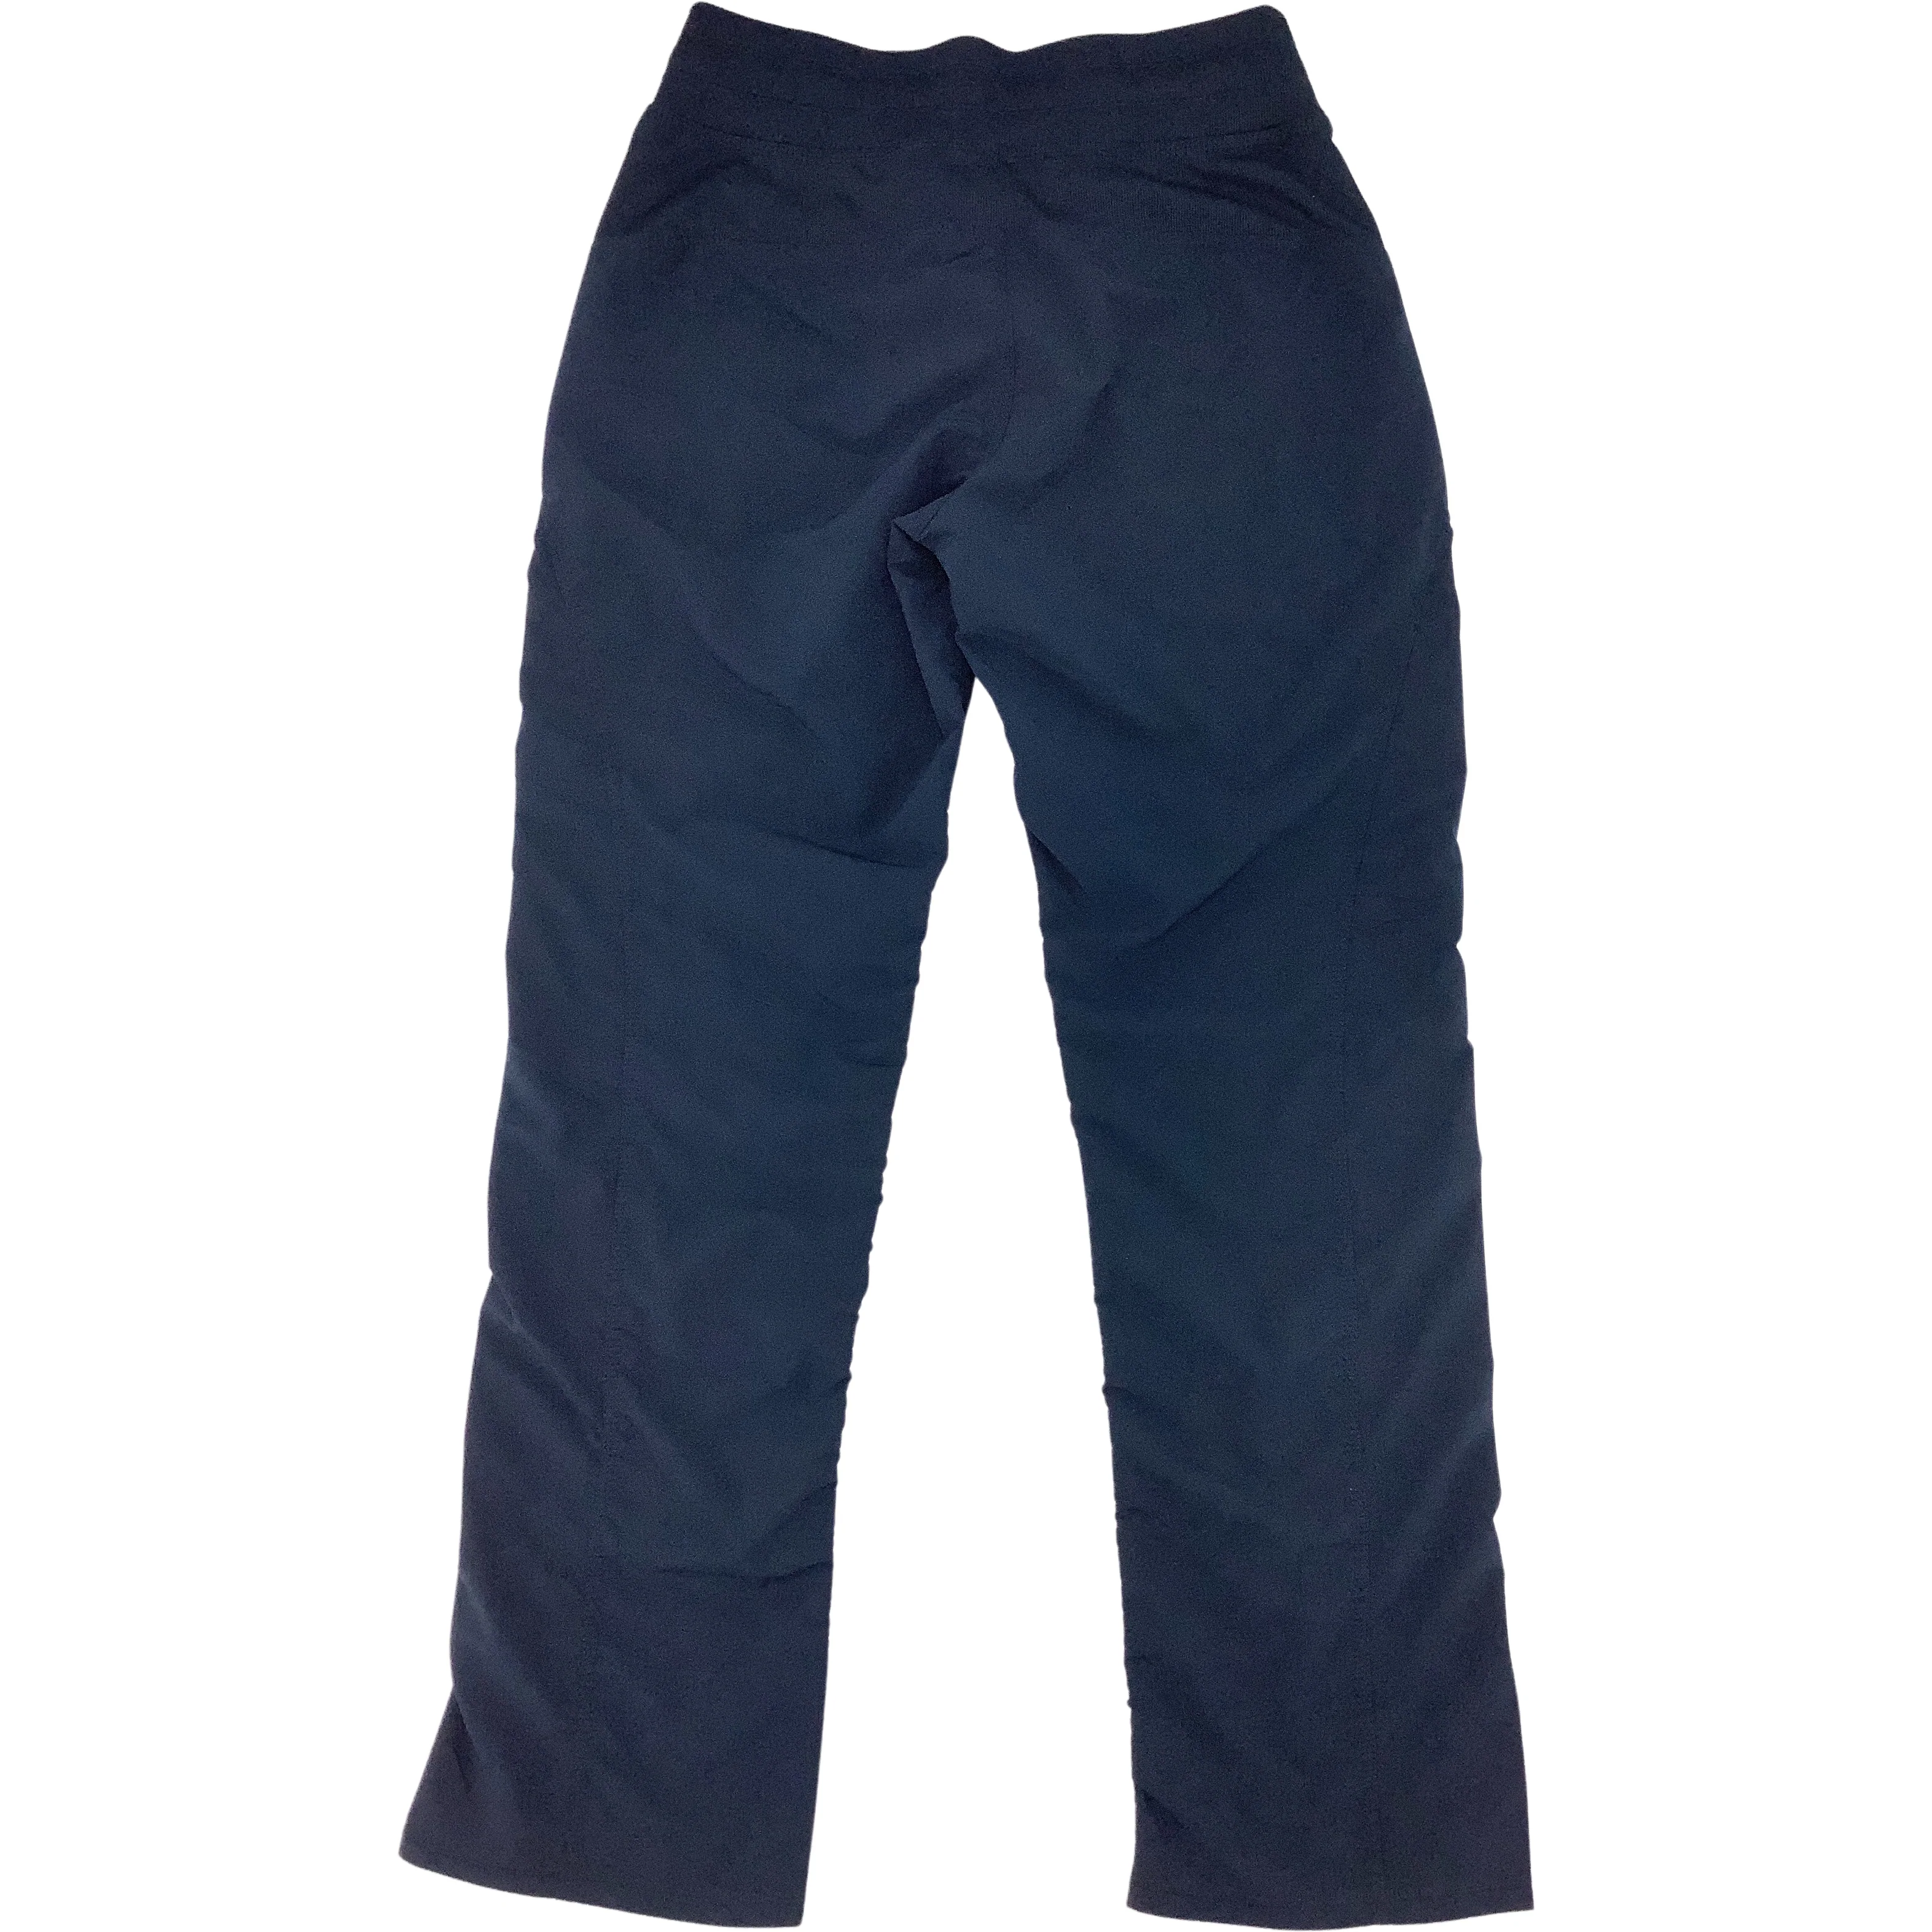 Kirkland Women's Woven Pants / Navy Blue / Women's Active Pants / Size S